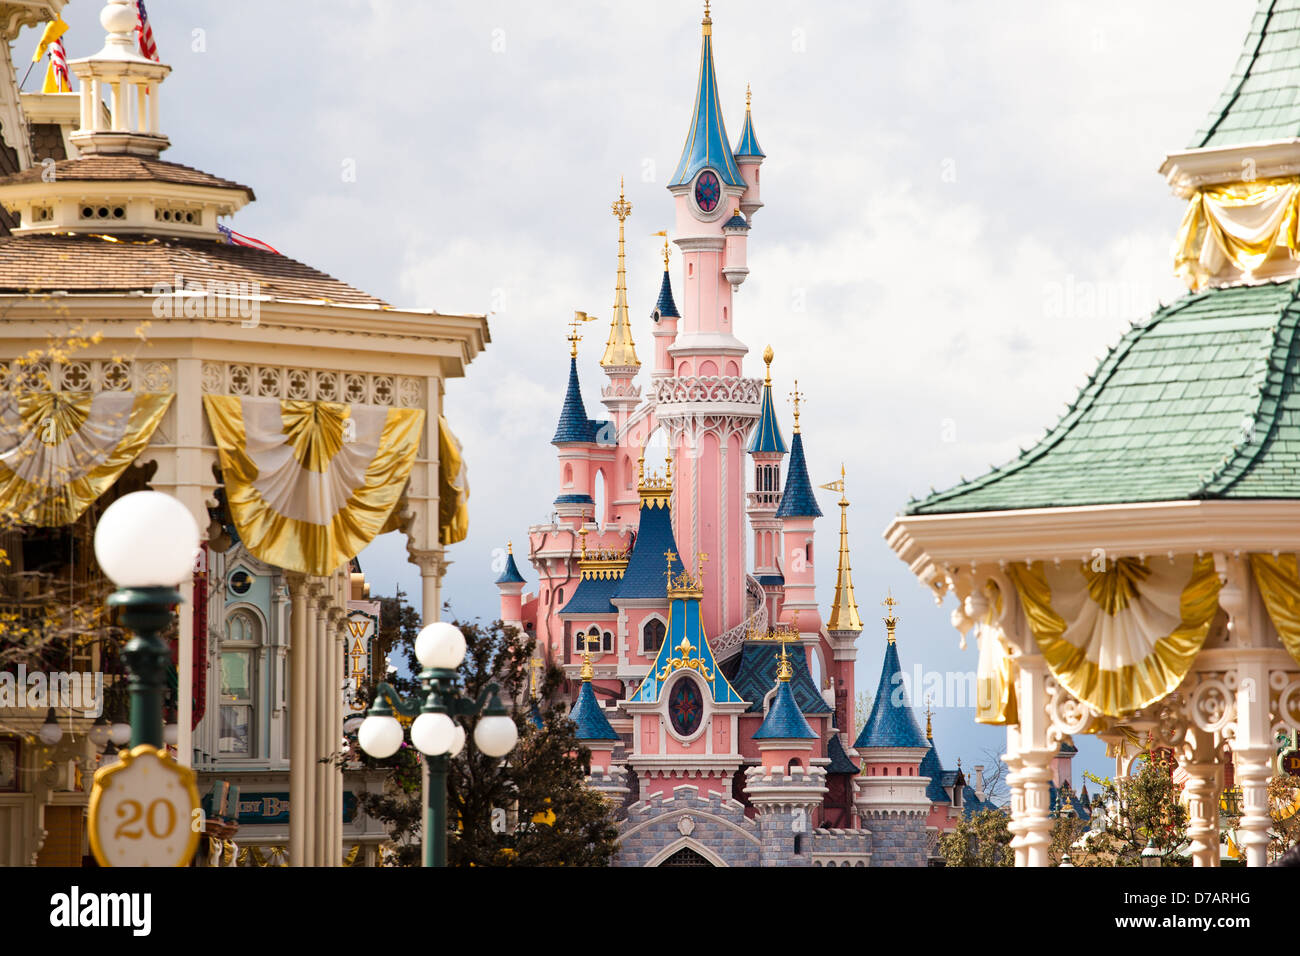 Europe France Paris Marne-la-Vallée Disneyland Sleeping Beauty Castle Stock Photo